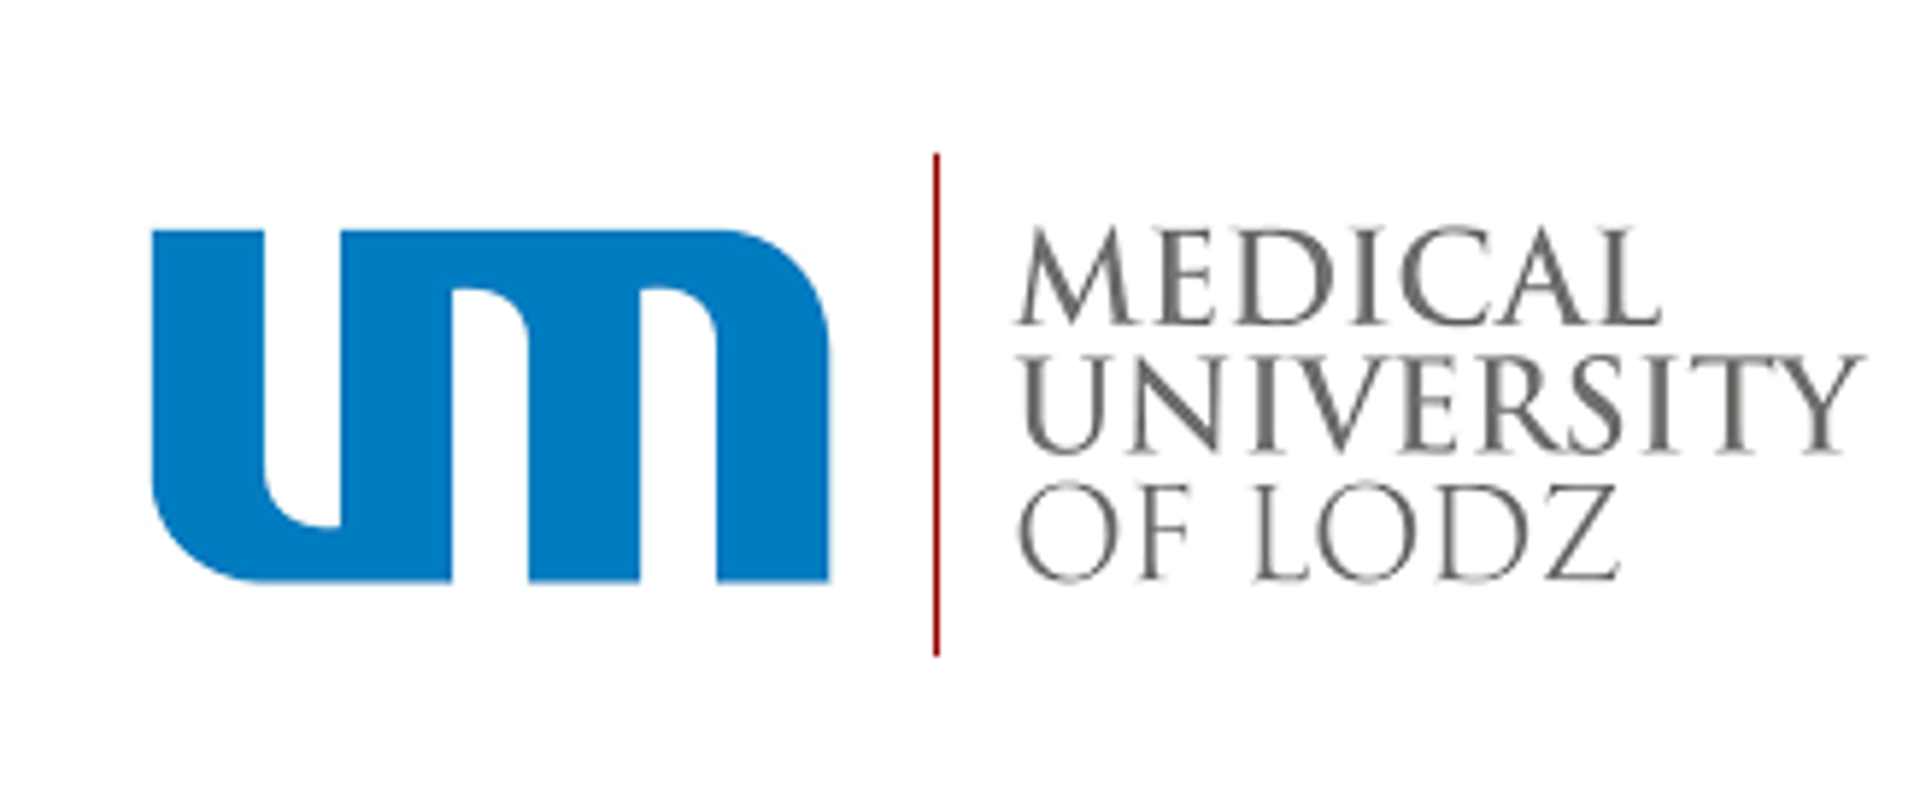 Medical University of Lodz_logo